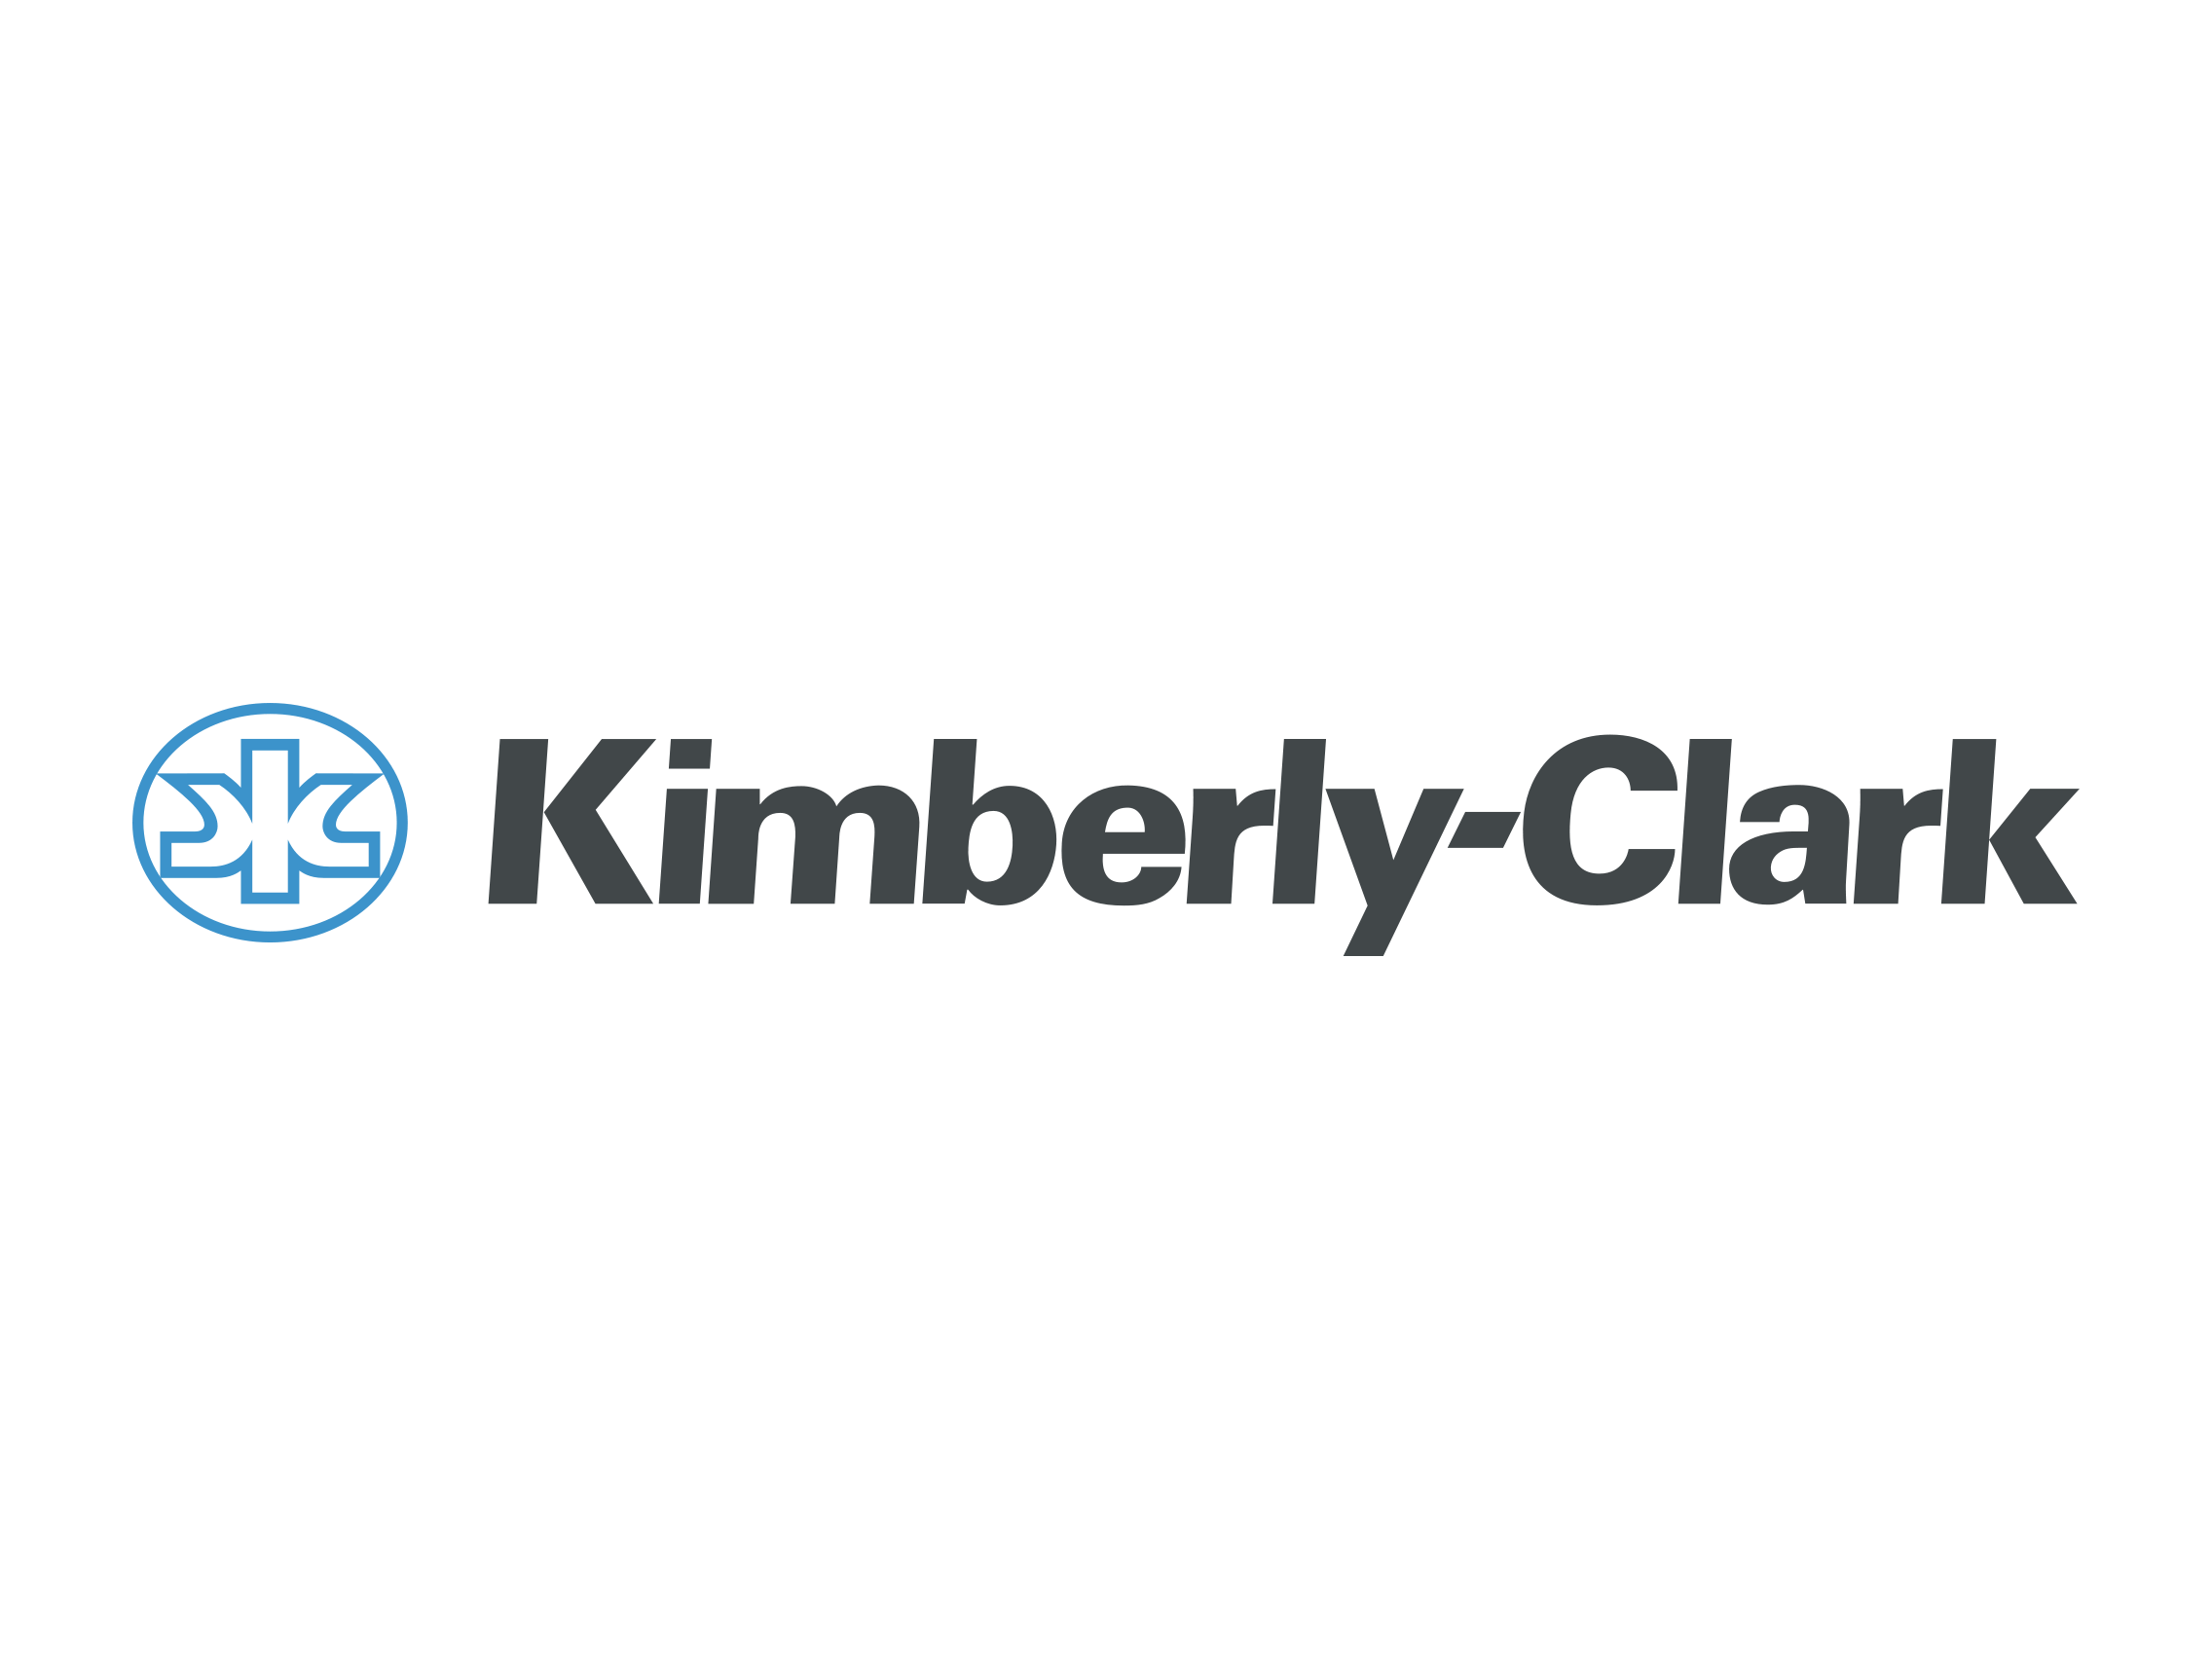 1872 Logo - Kimberly-Clark logo | Logok